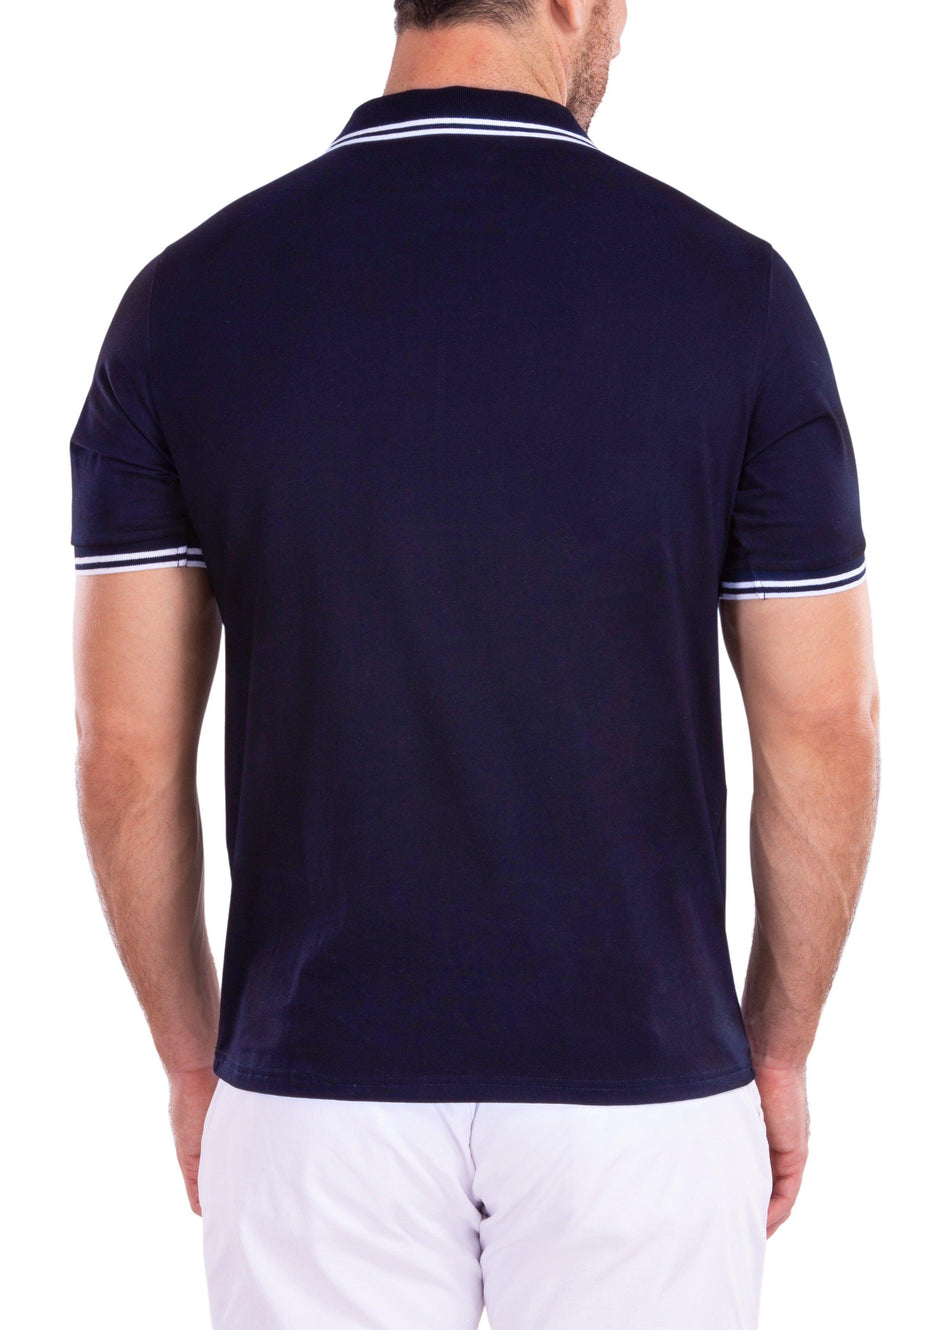 Men's Essentials Solid Navy Zipper Polo Shirt